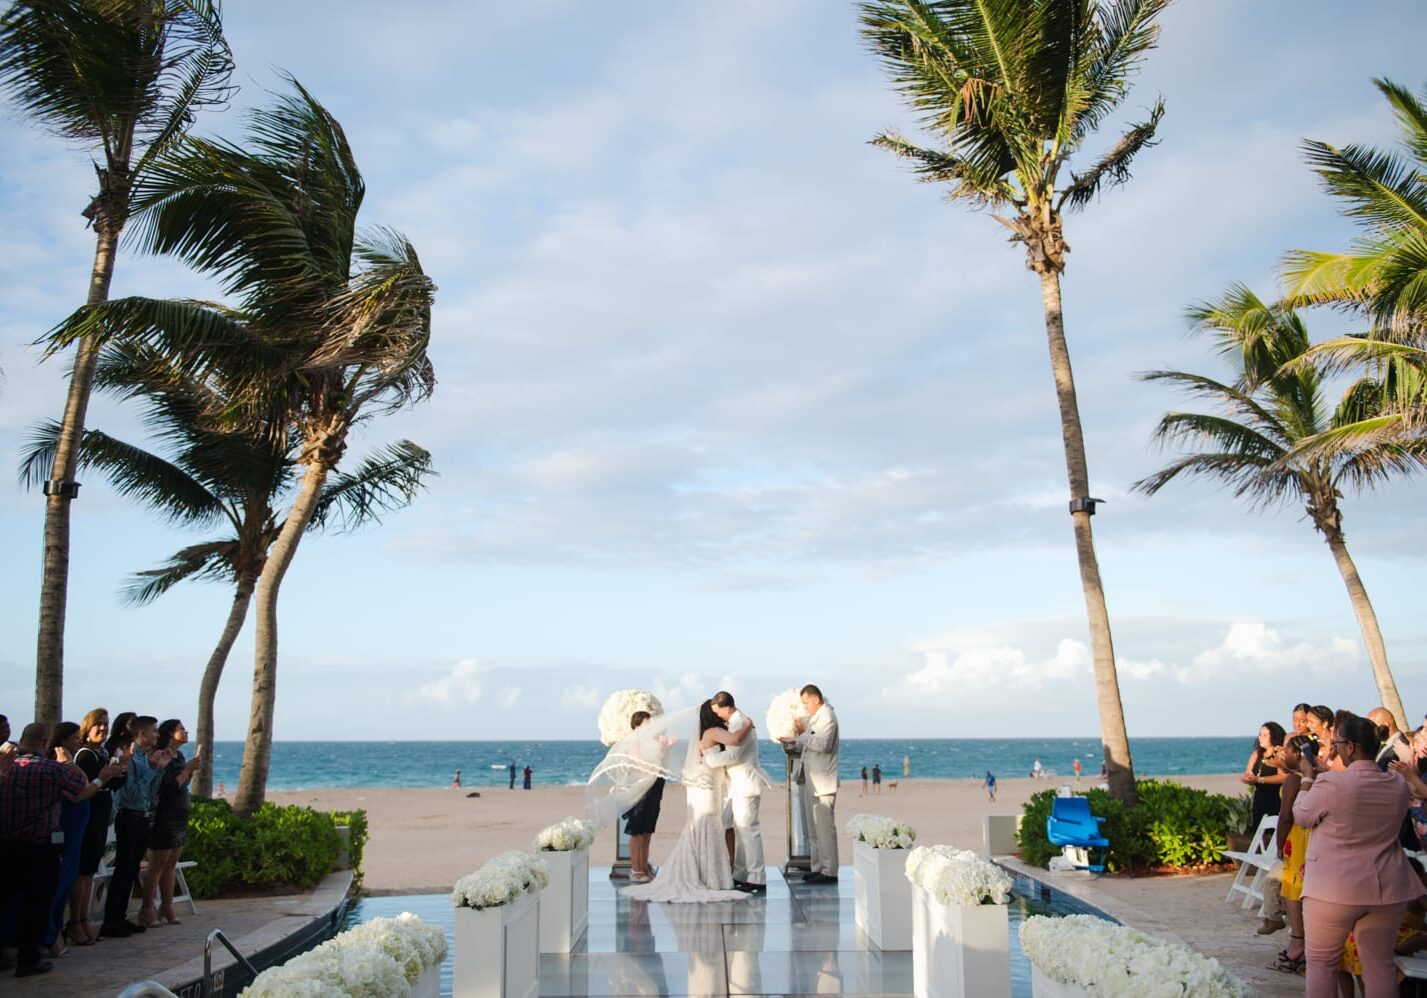 Puerto Rico wedding photographer camille fontanez captures a sophisticated destination wedding at La Concha Resort